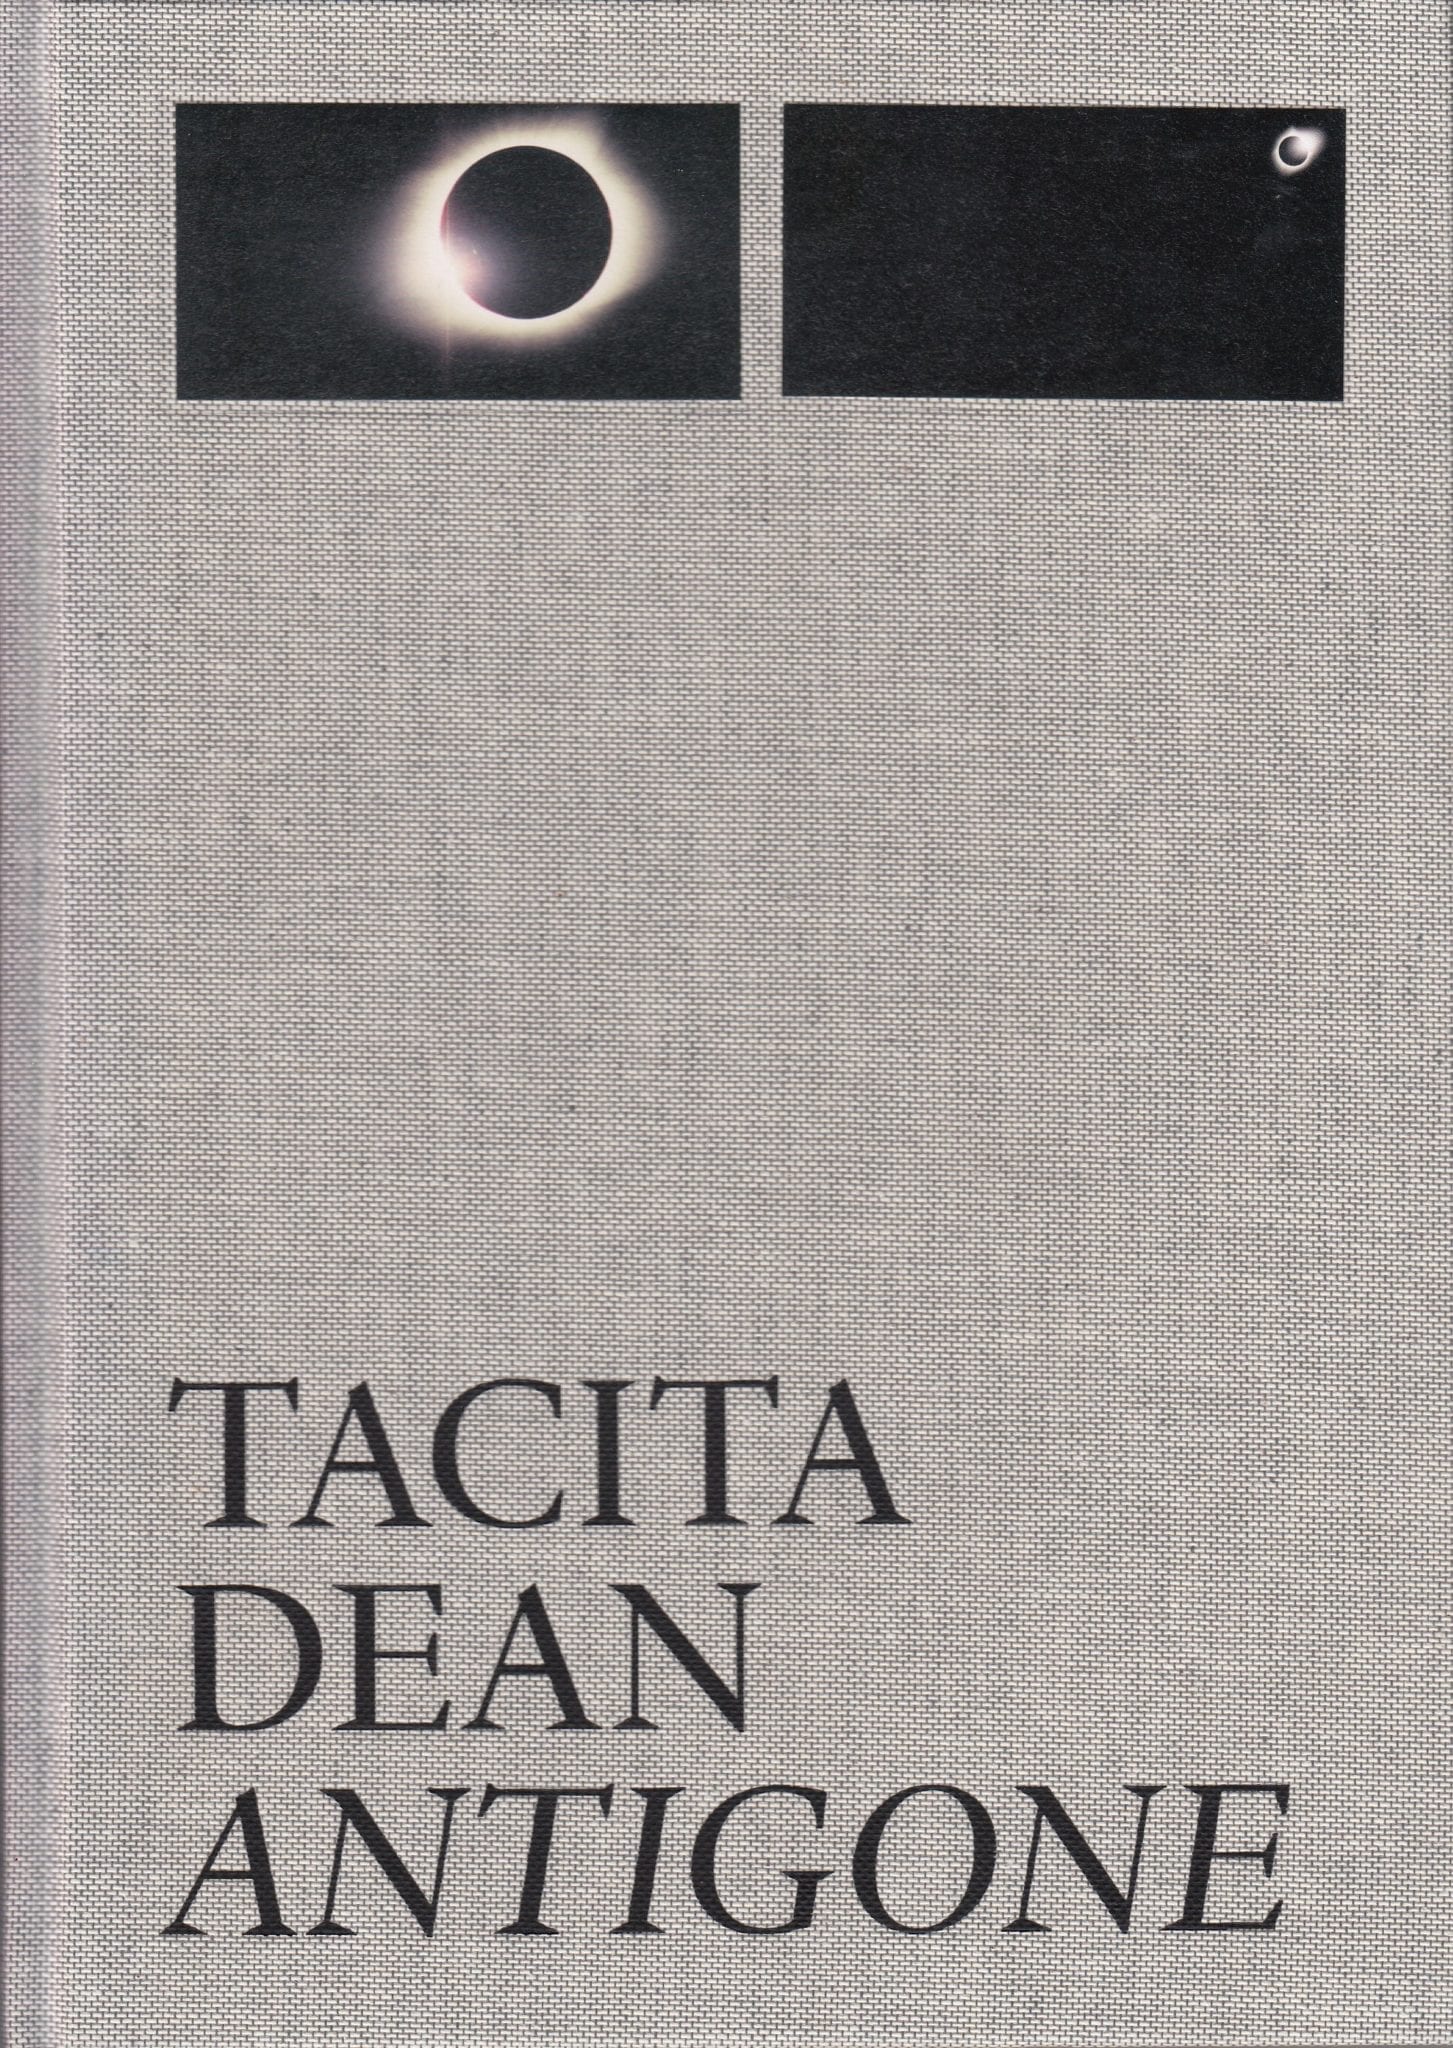 Tacita Dean - Antigone. DKimage